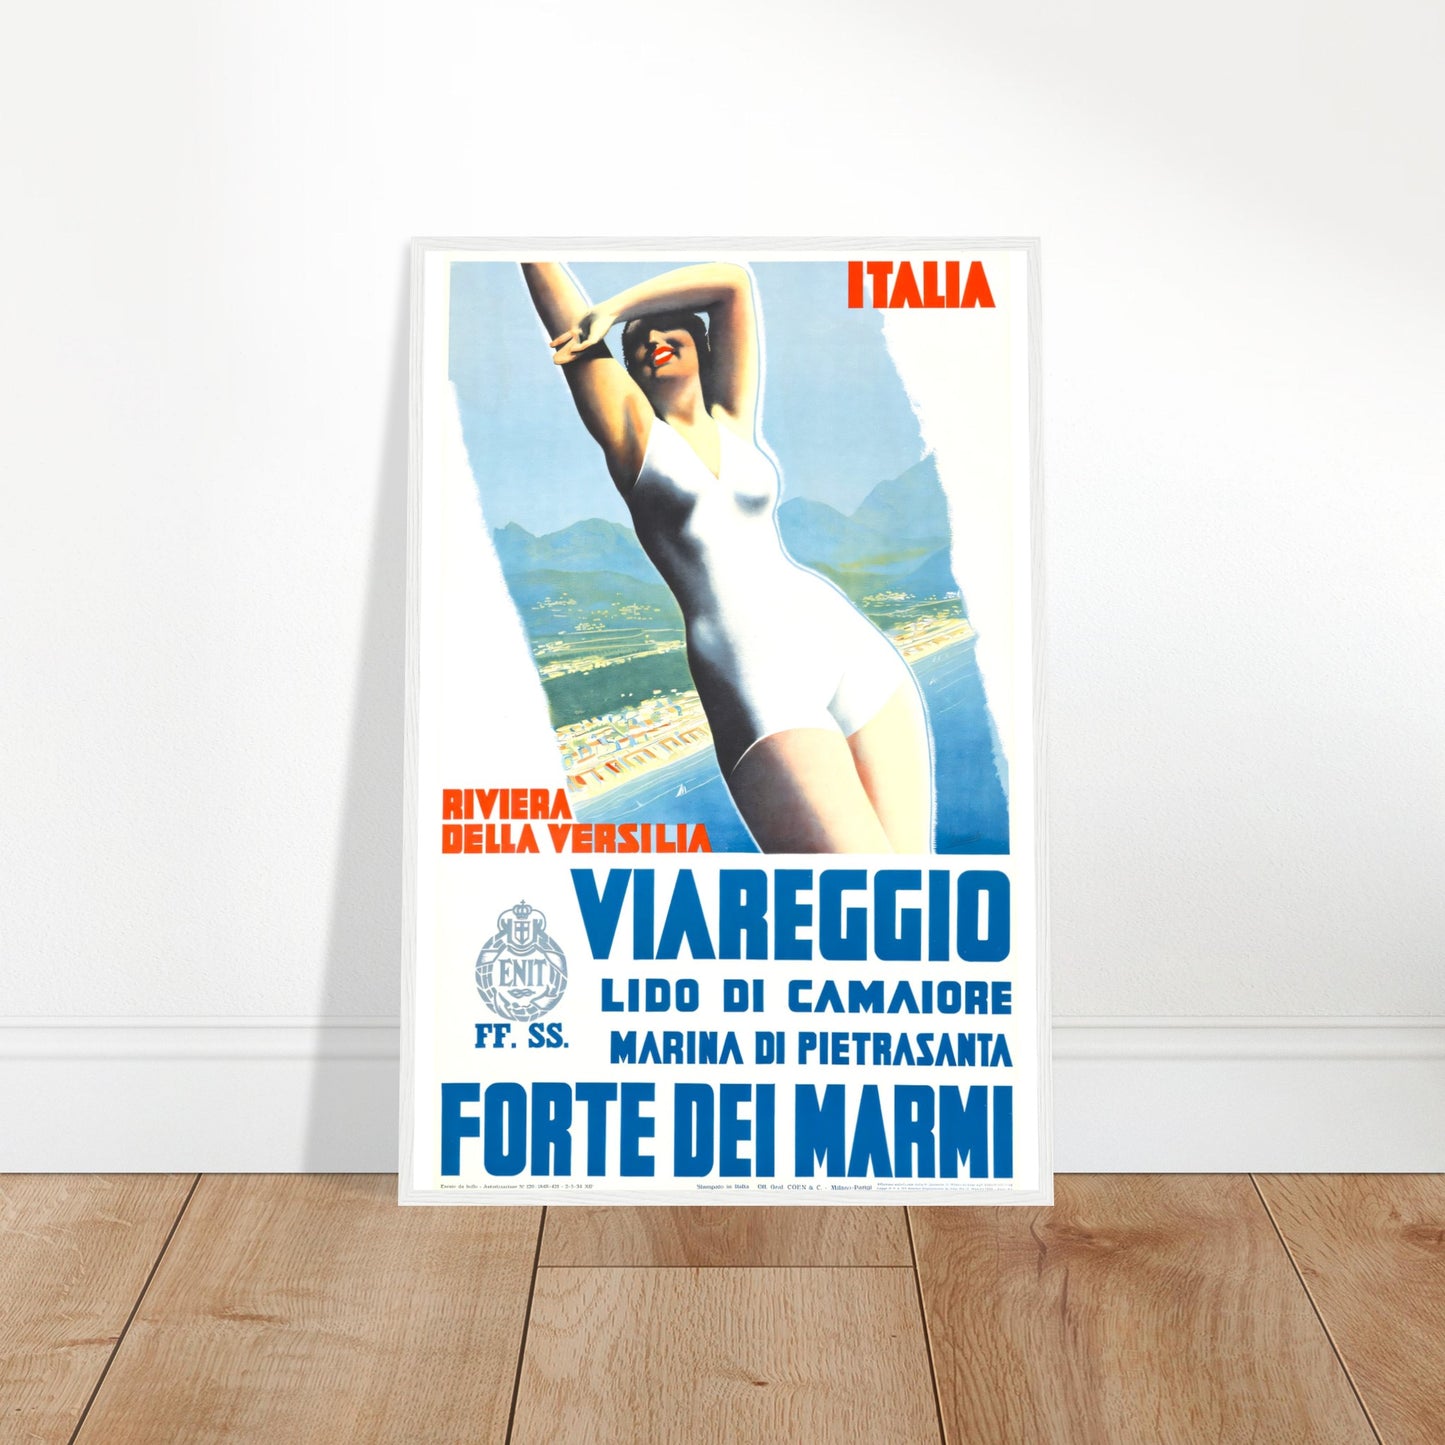 Viareggio Vintage Poster Reprint on Premium matte paper - Posterify